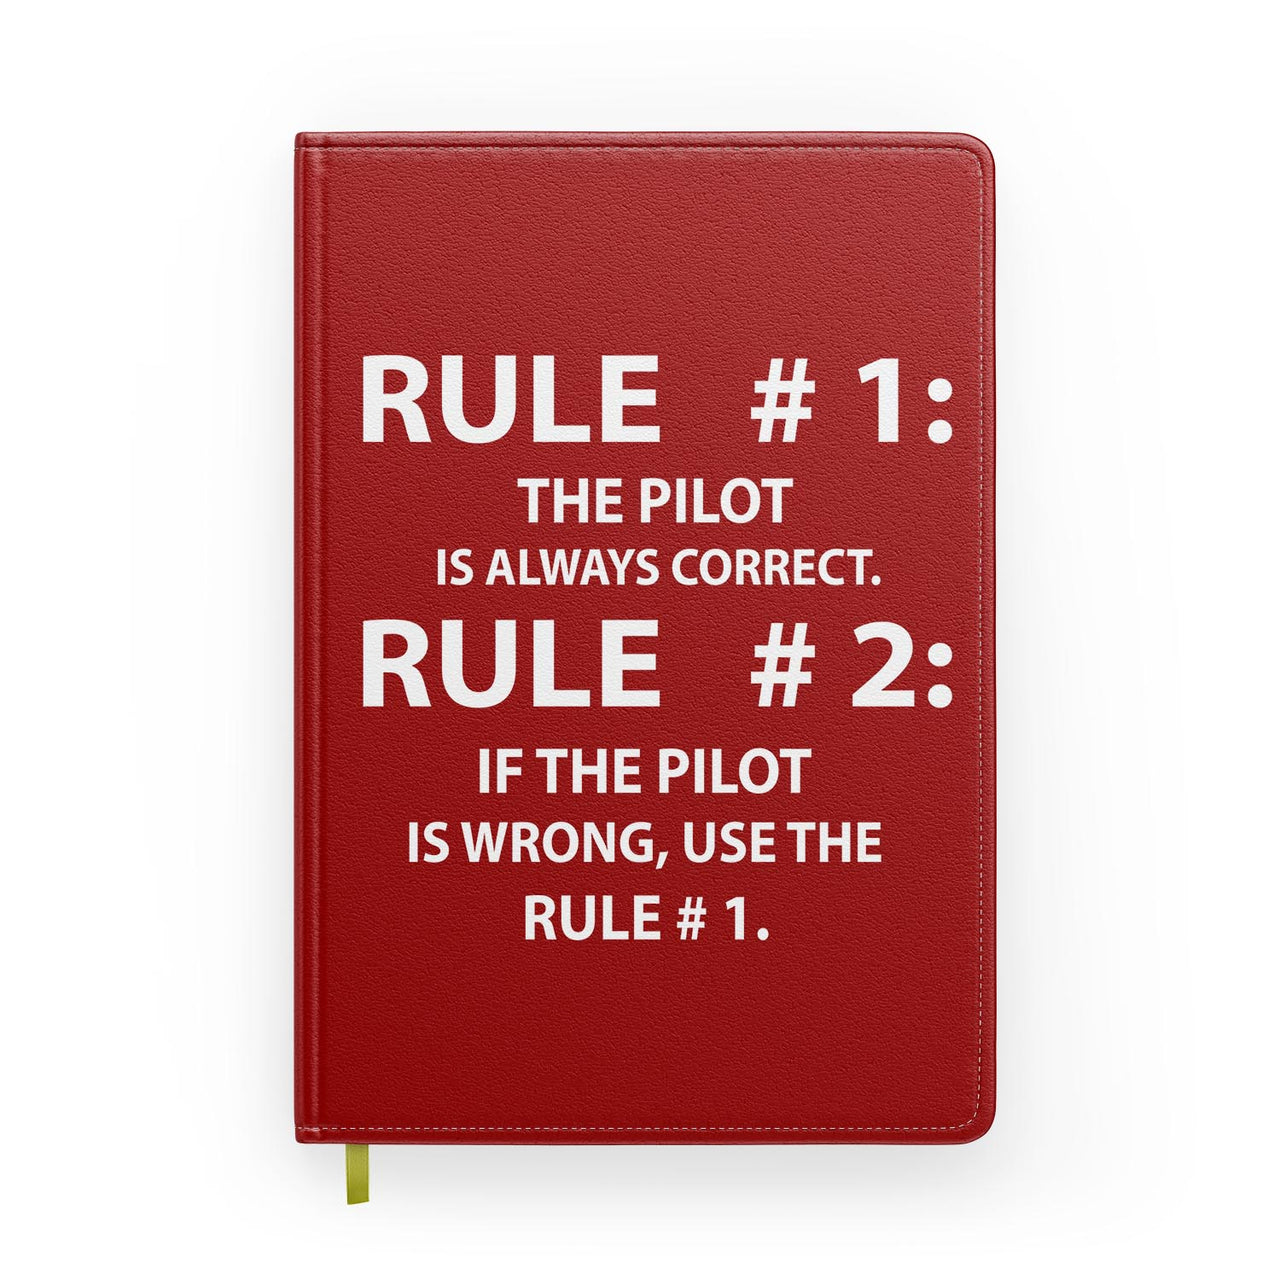 Rule 1 - Pilot is Always Correct Designed Notebooks